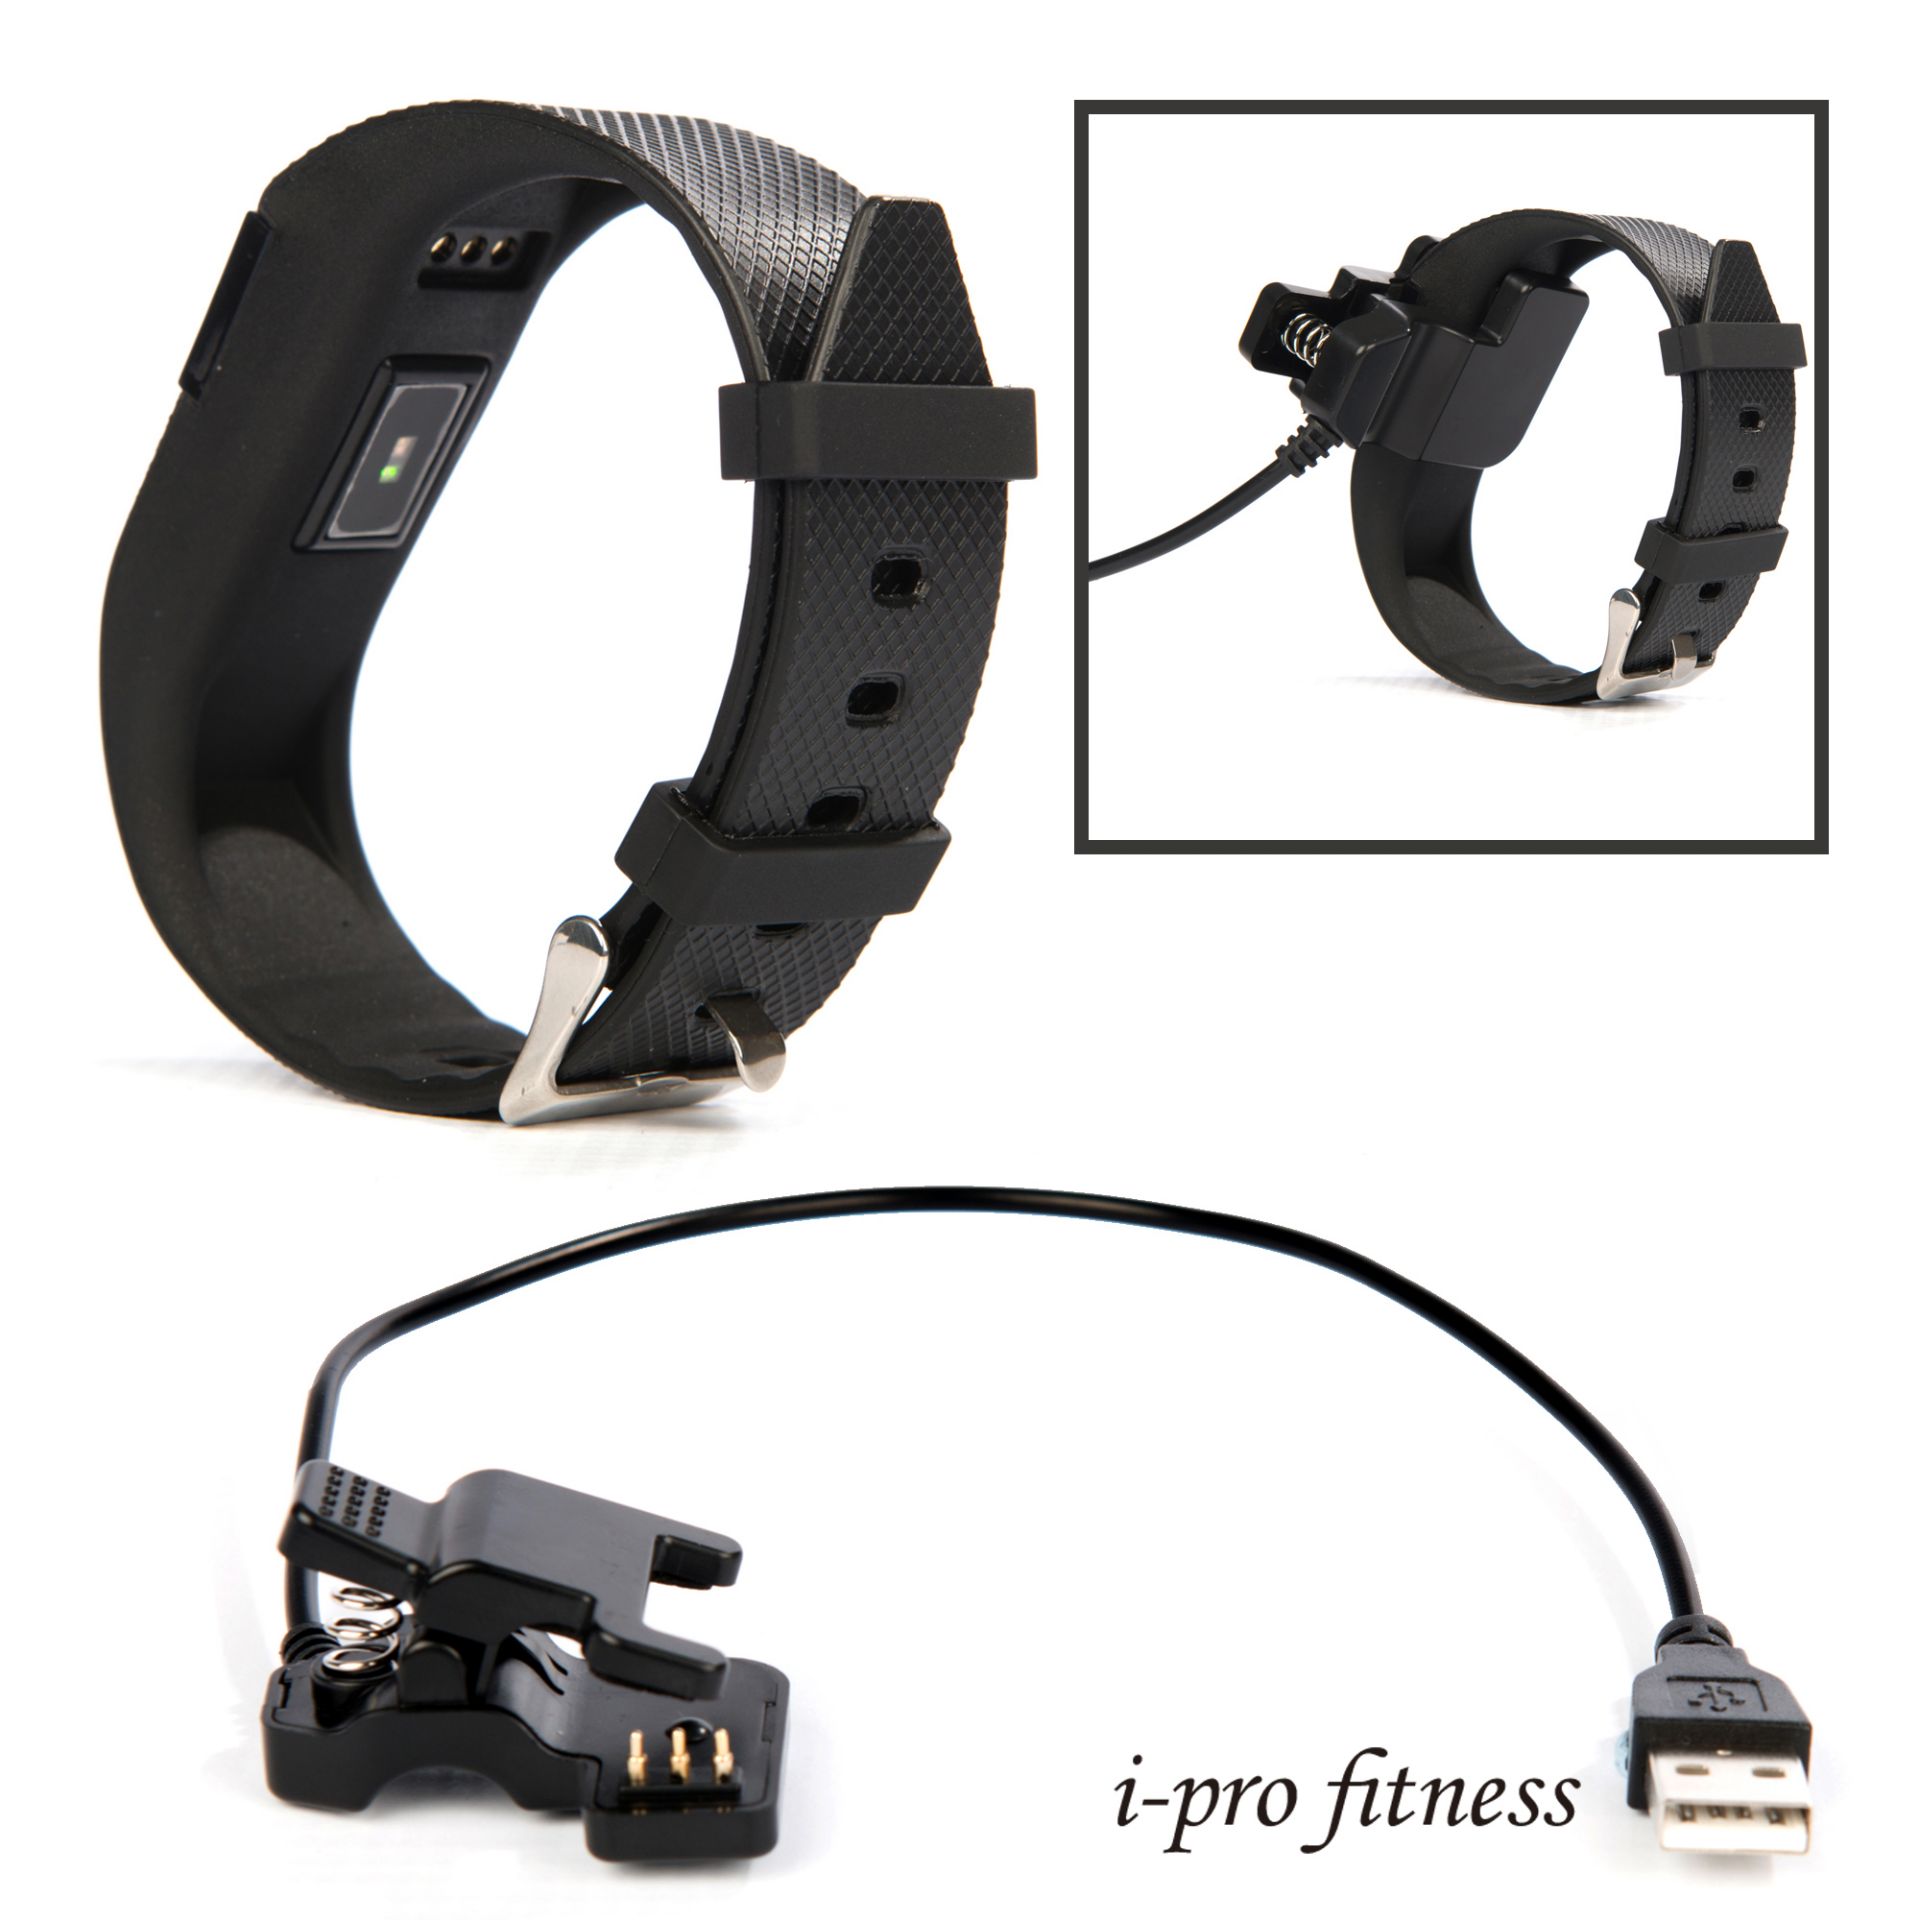 Fitness Tracker i-pro fitness, Bluetooth 4.0 Sports Smart Bracelet, Heart Rate Monitor & Pedometer. - Image 7 of 8